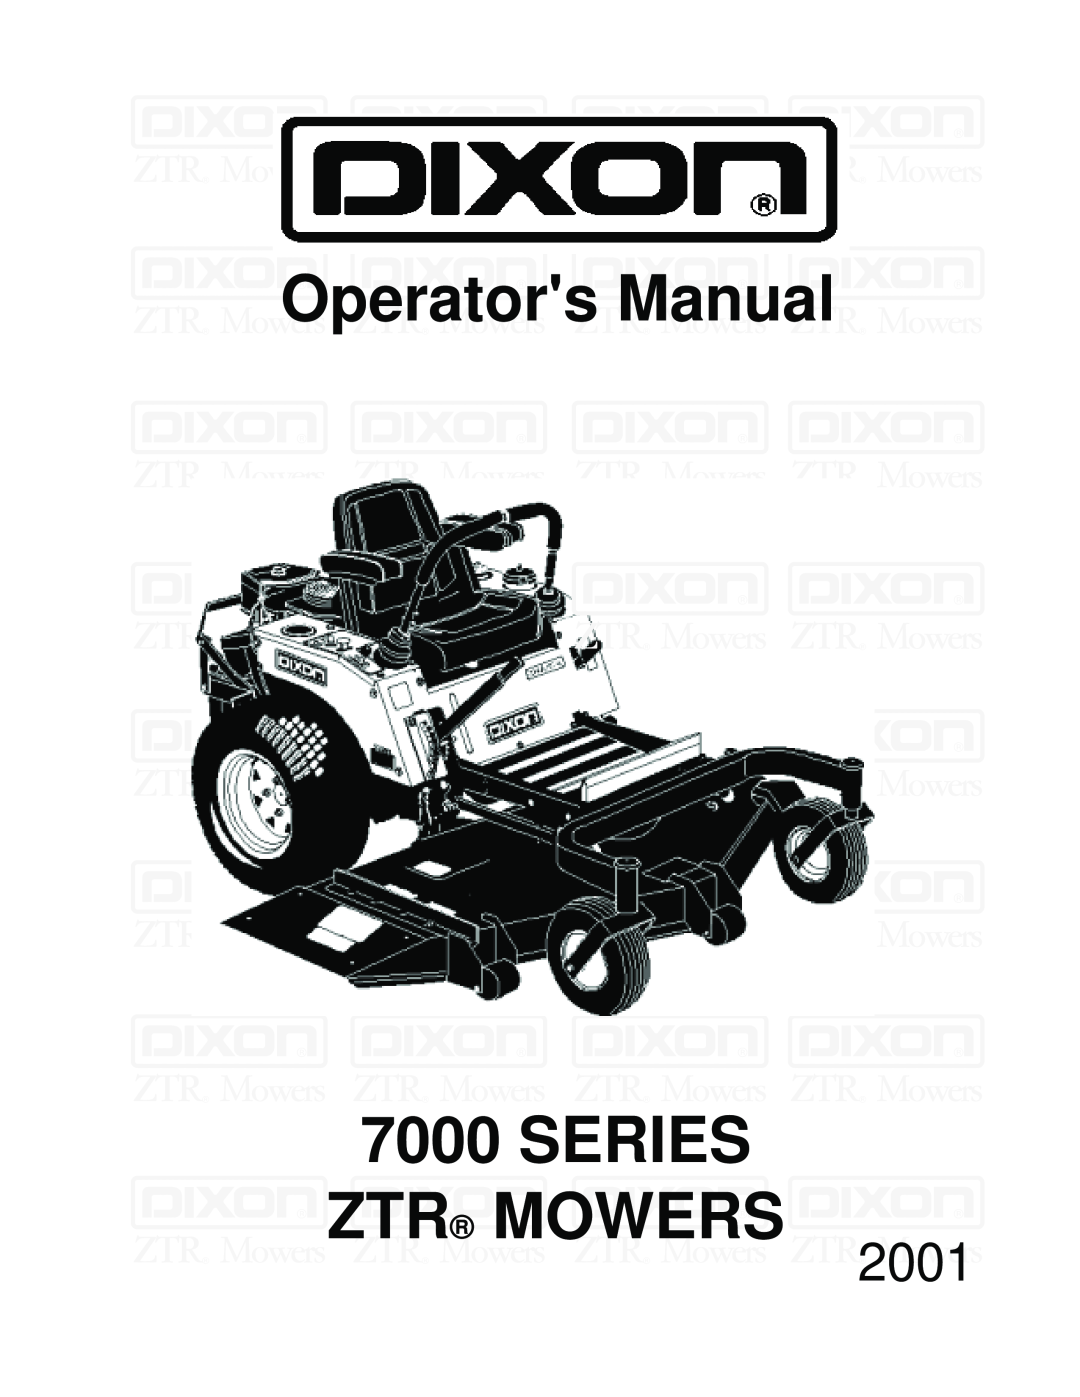 Dixon 13091-0500, ZTR 7025 manual Operators Manual, Series Ztr Mowers, 2001 